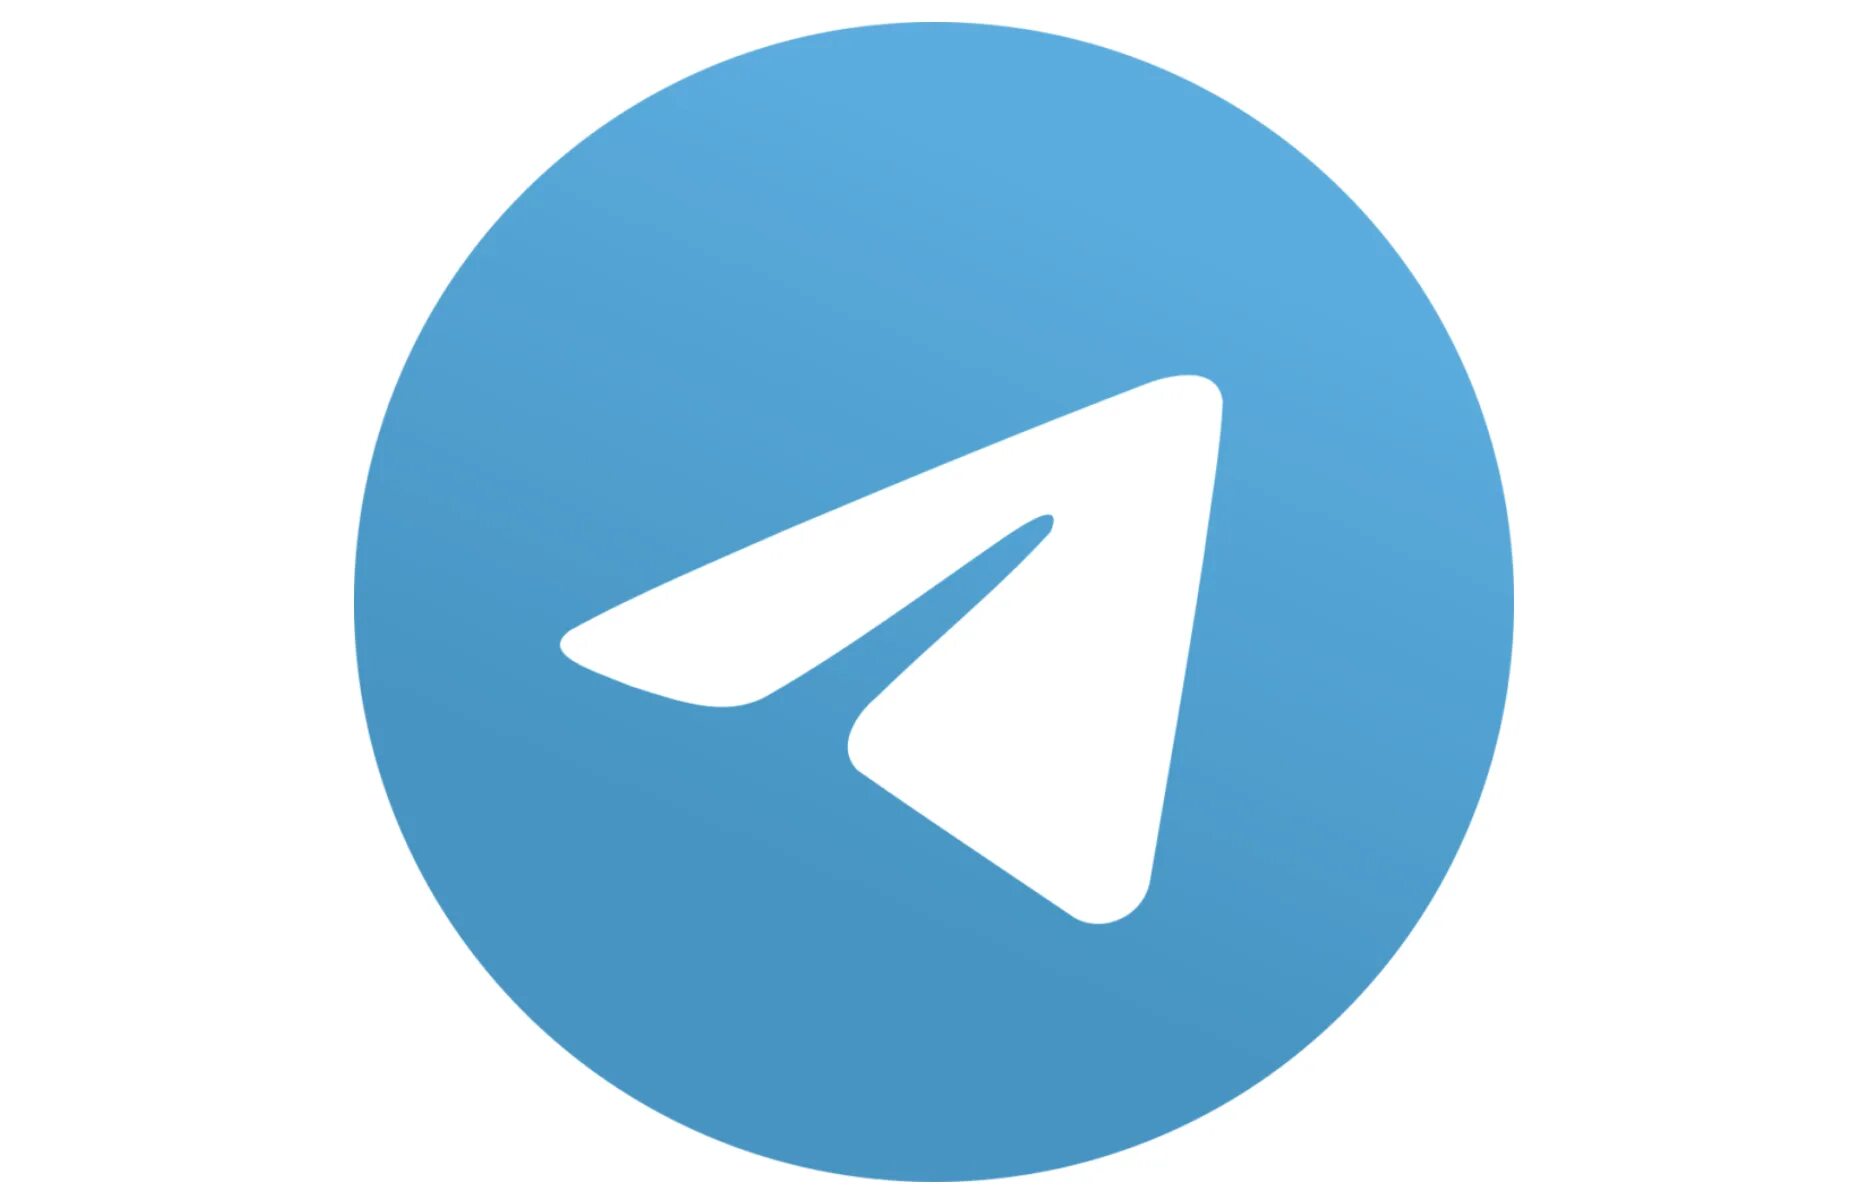 Telegram pictures. Telegram логотип 2022. Значок телеграмм. Телега логотип. Логотип телеграм прозрачный.